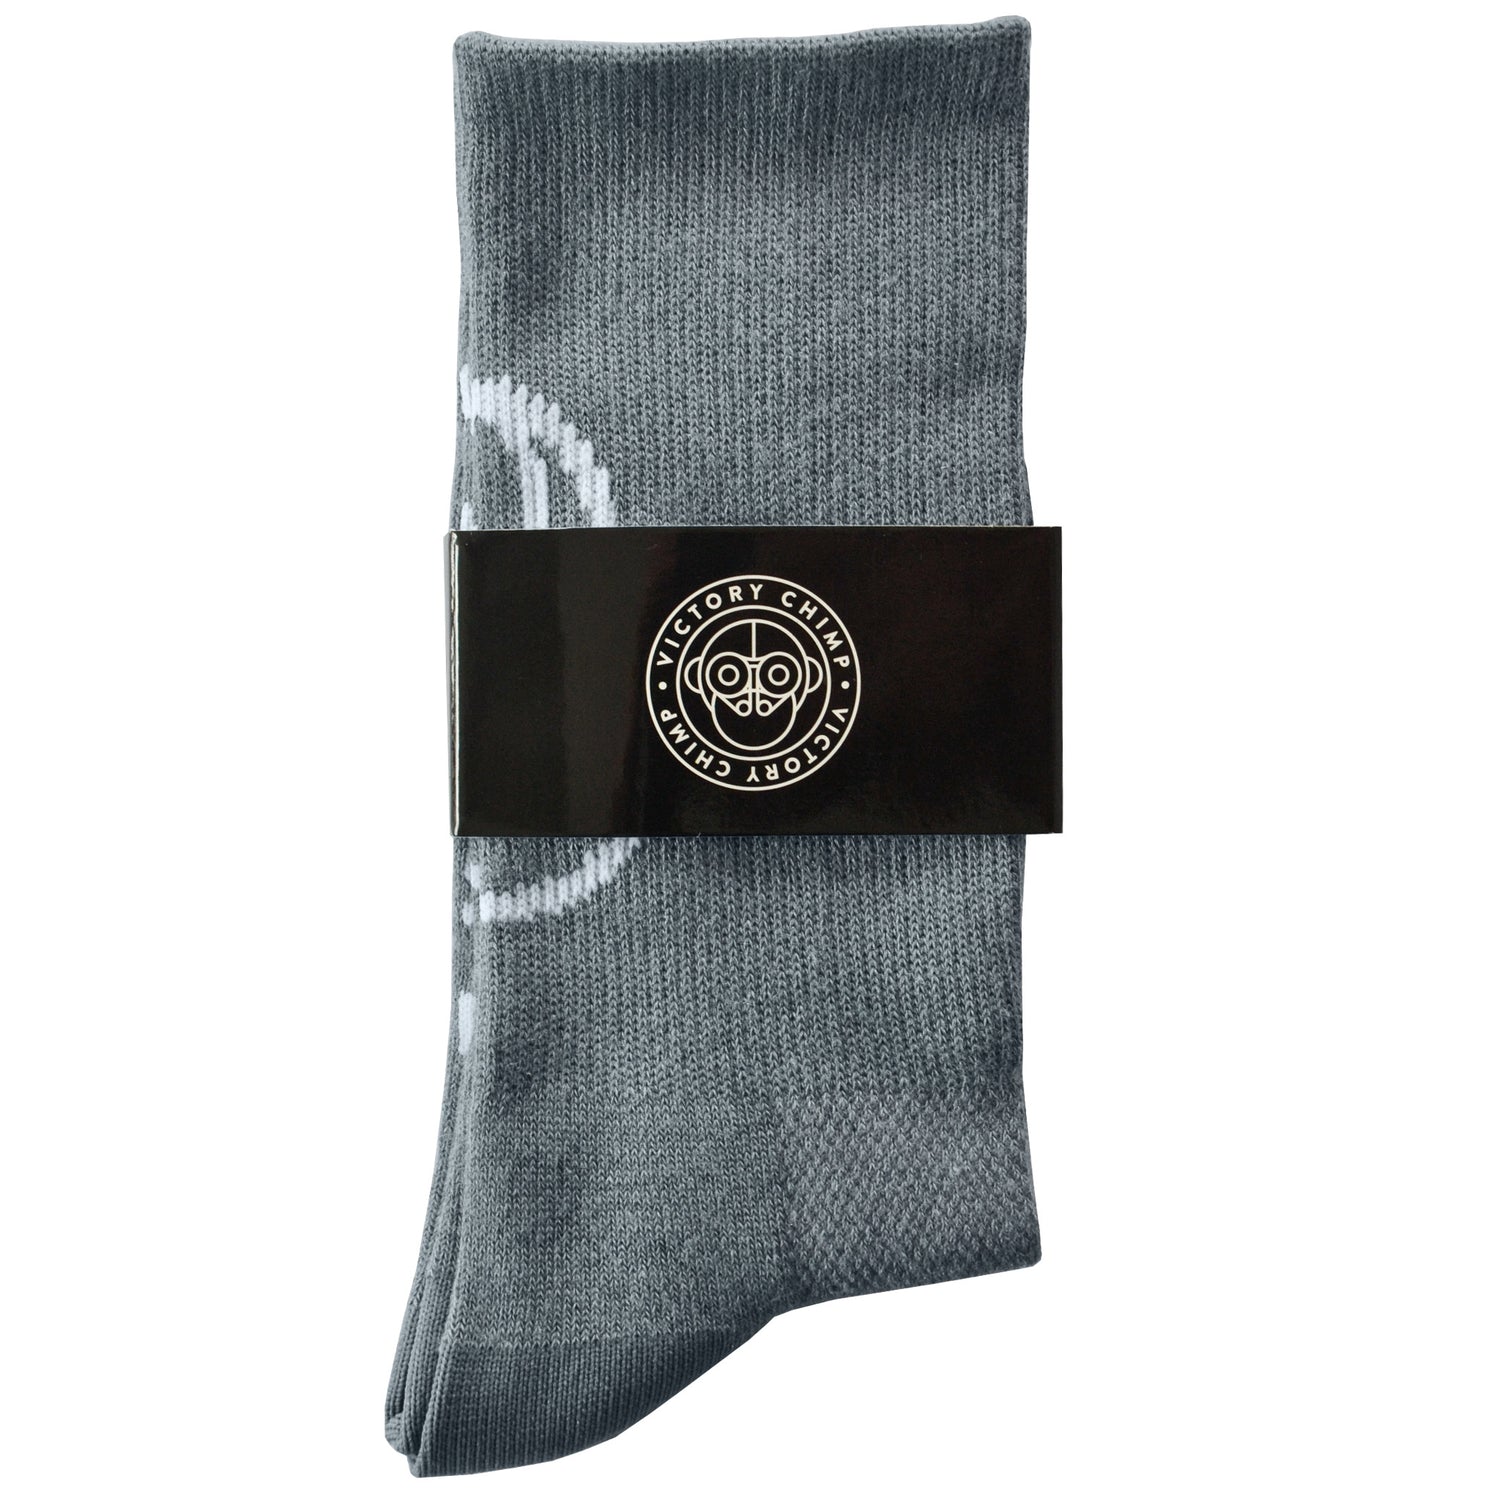 Signature Chimpeur High Top Socks (Slate Grey)